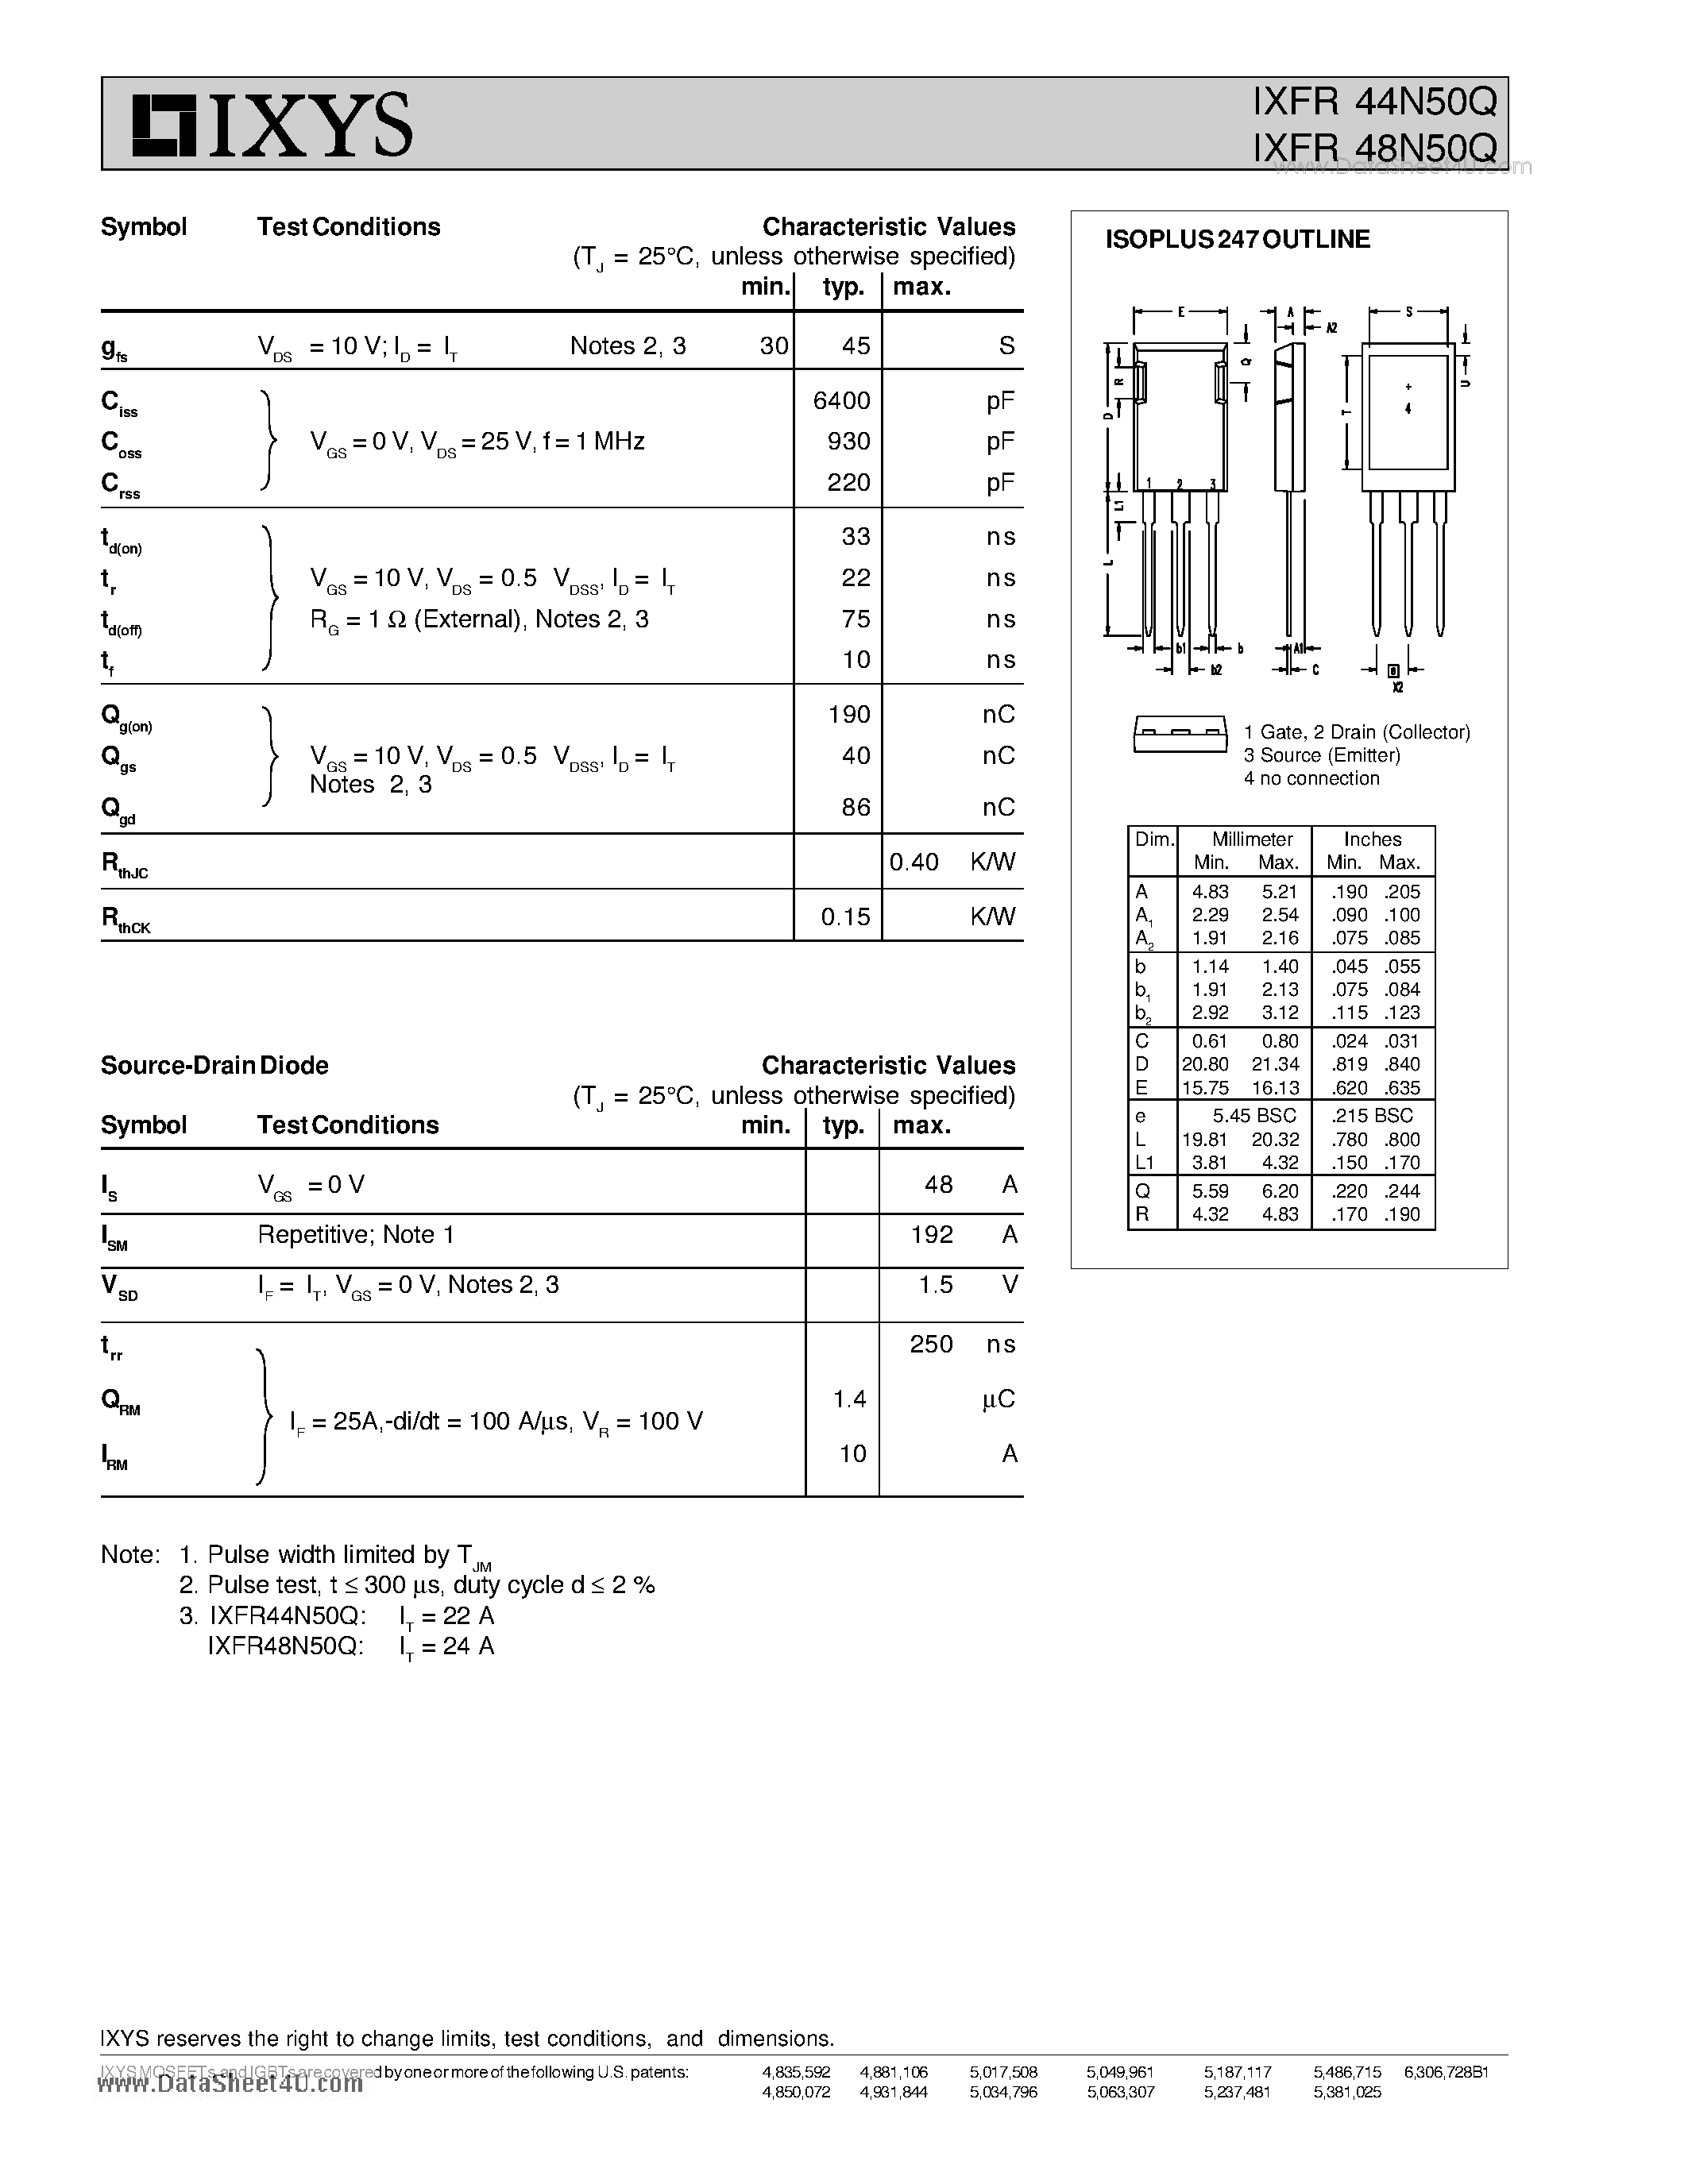 Datasheet IXFR44N50Q - HiPerFET Power MOSFETs ISOPLUS247 Q-Class page 2